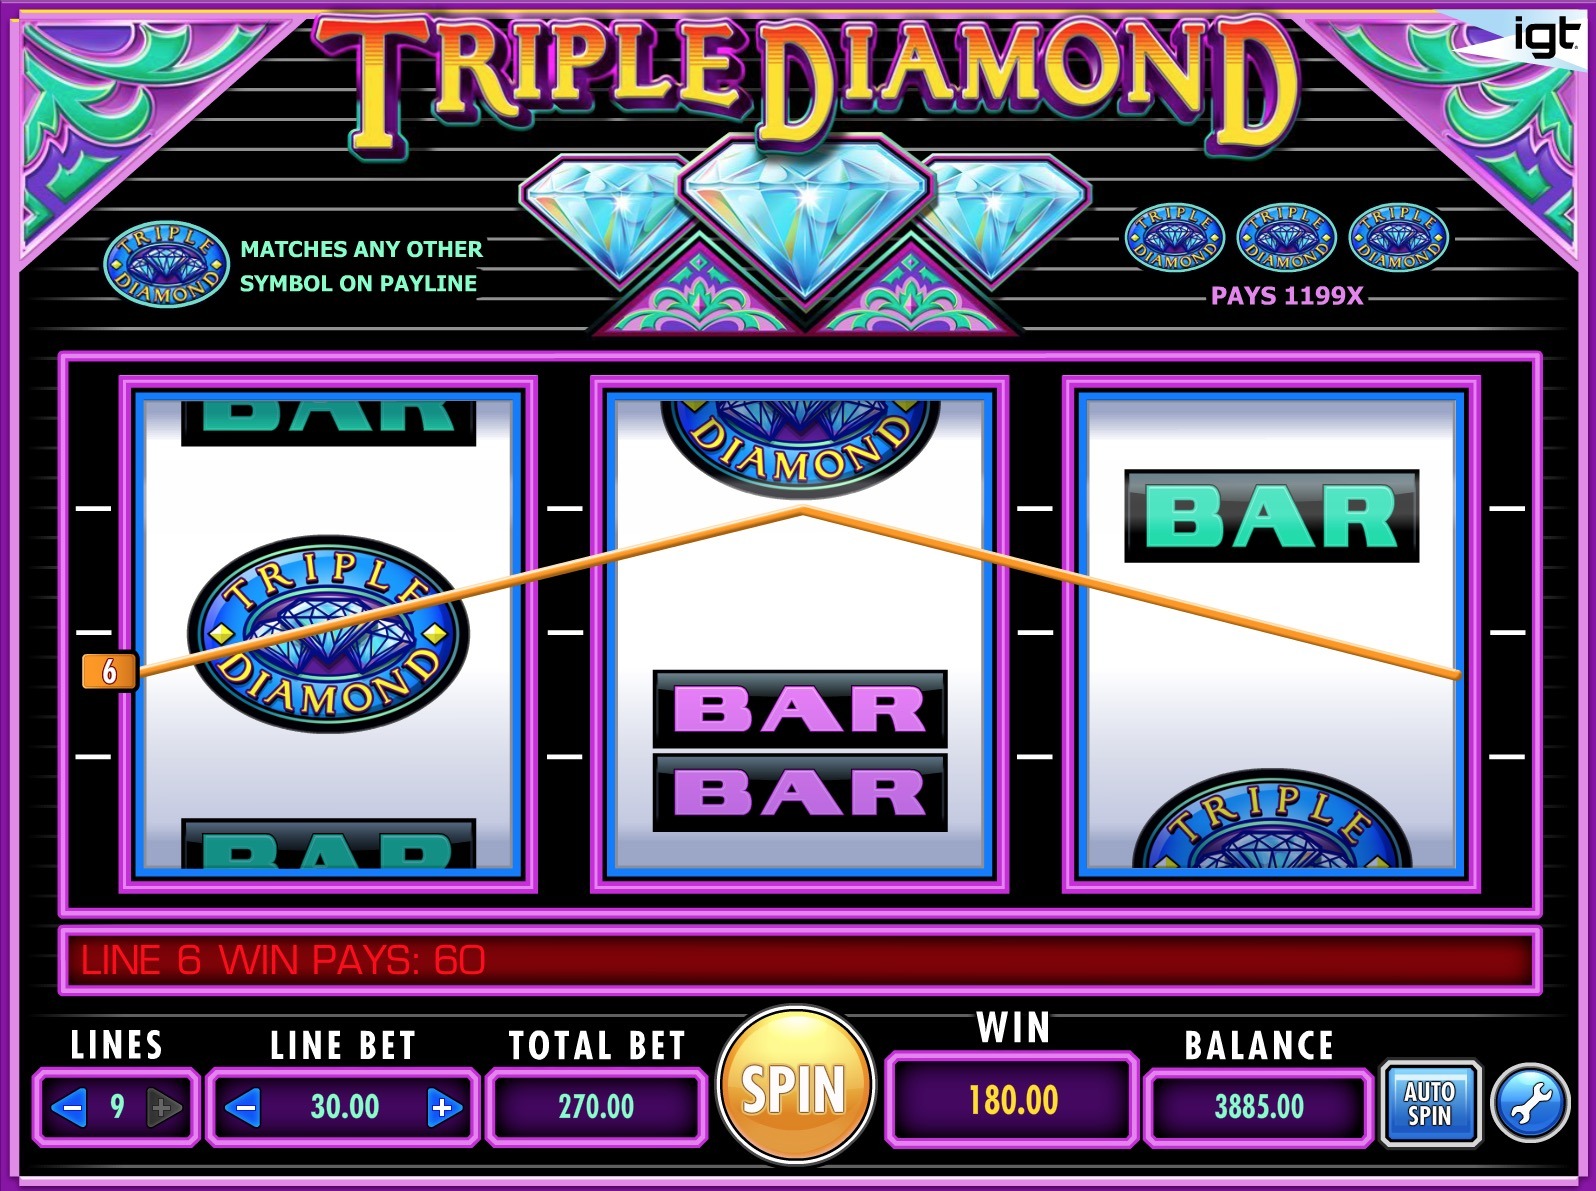 triple double diamond slot machine free games